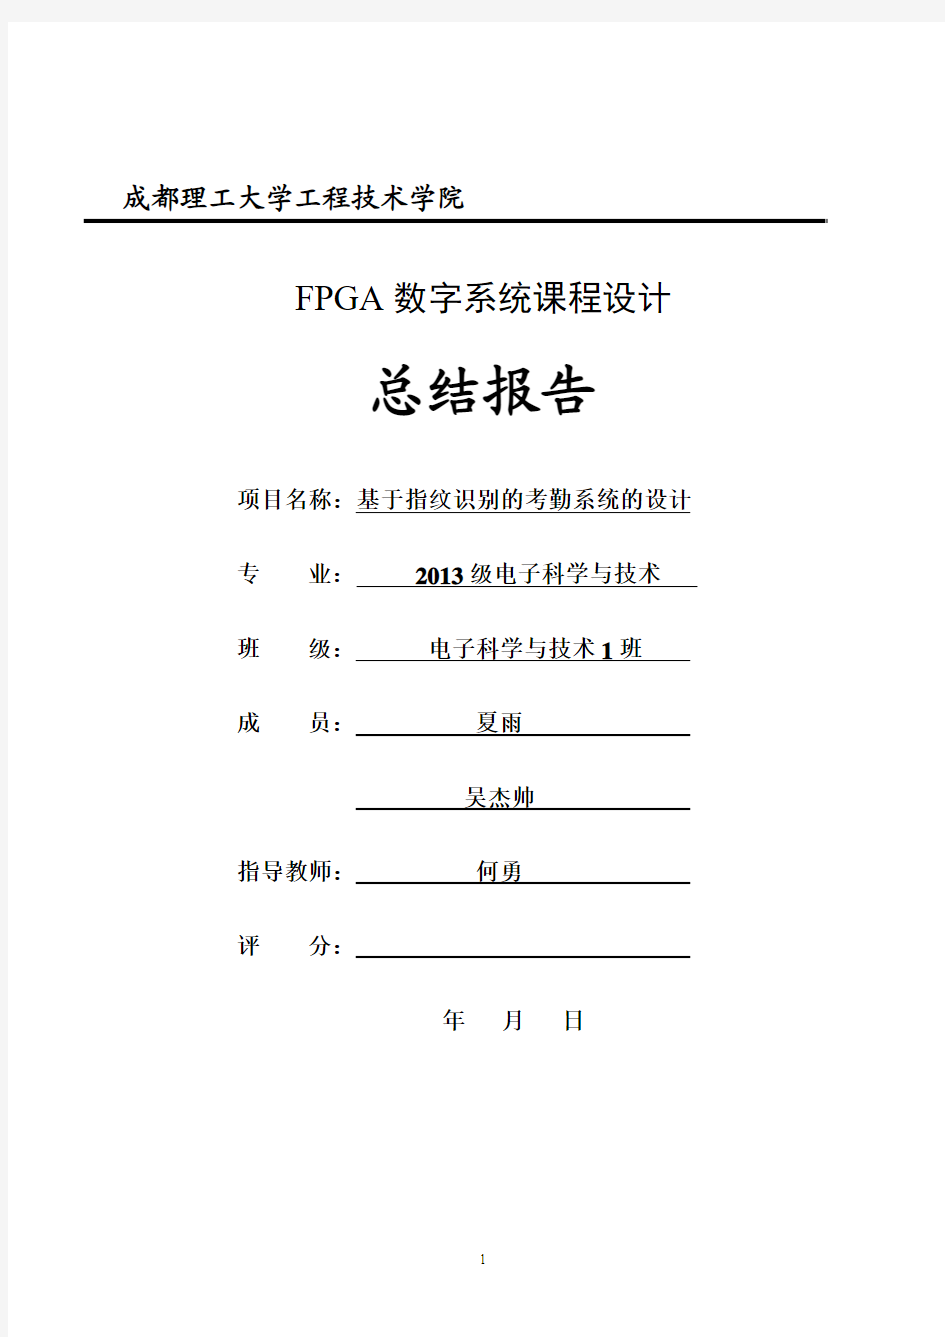 fpga课程设计总结报告模版